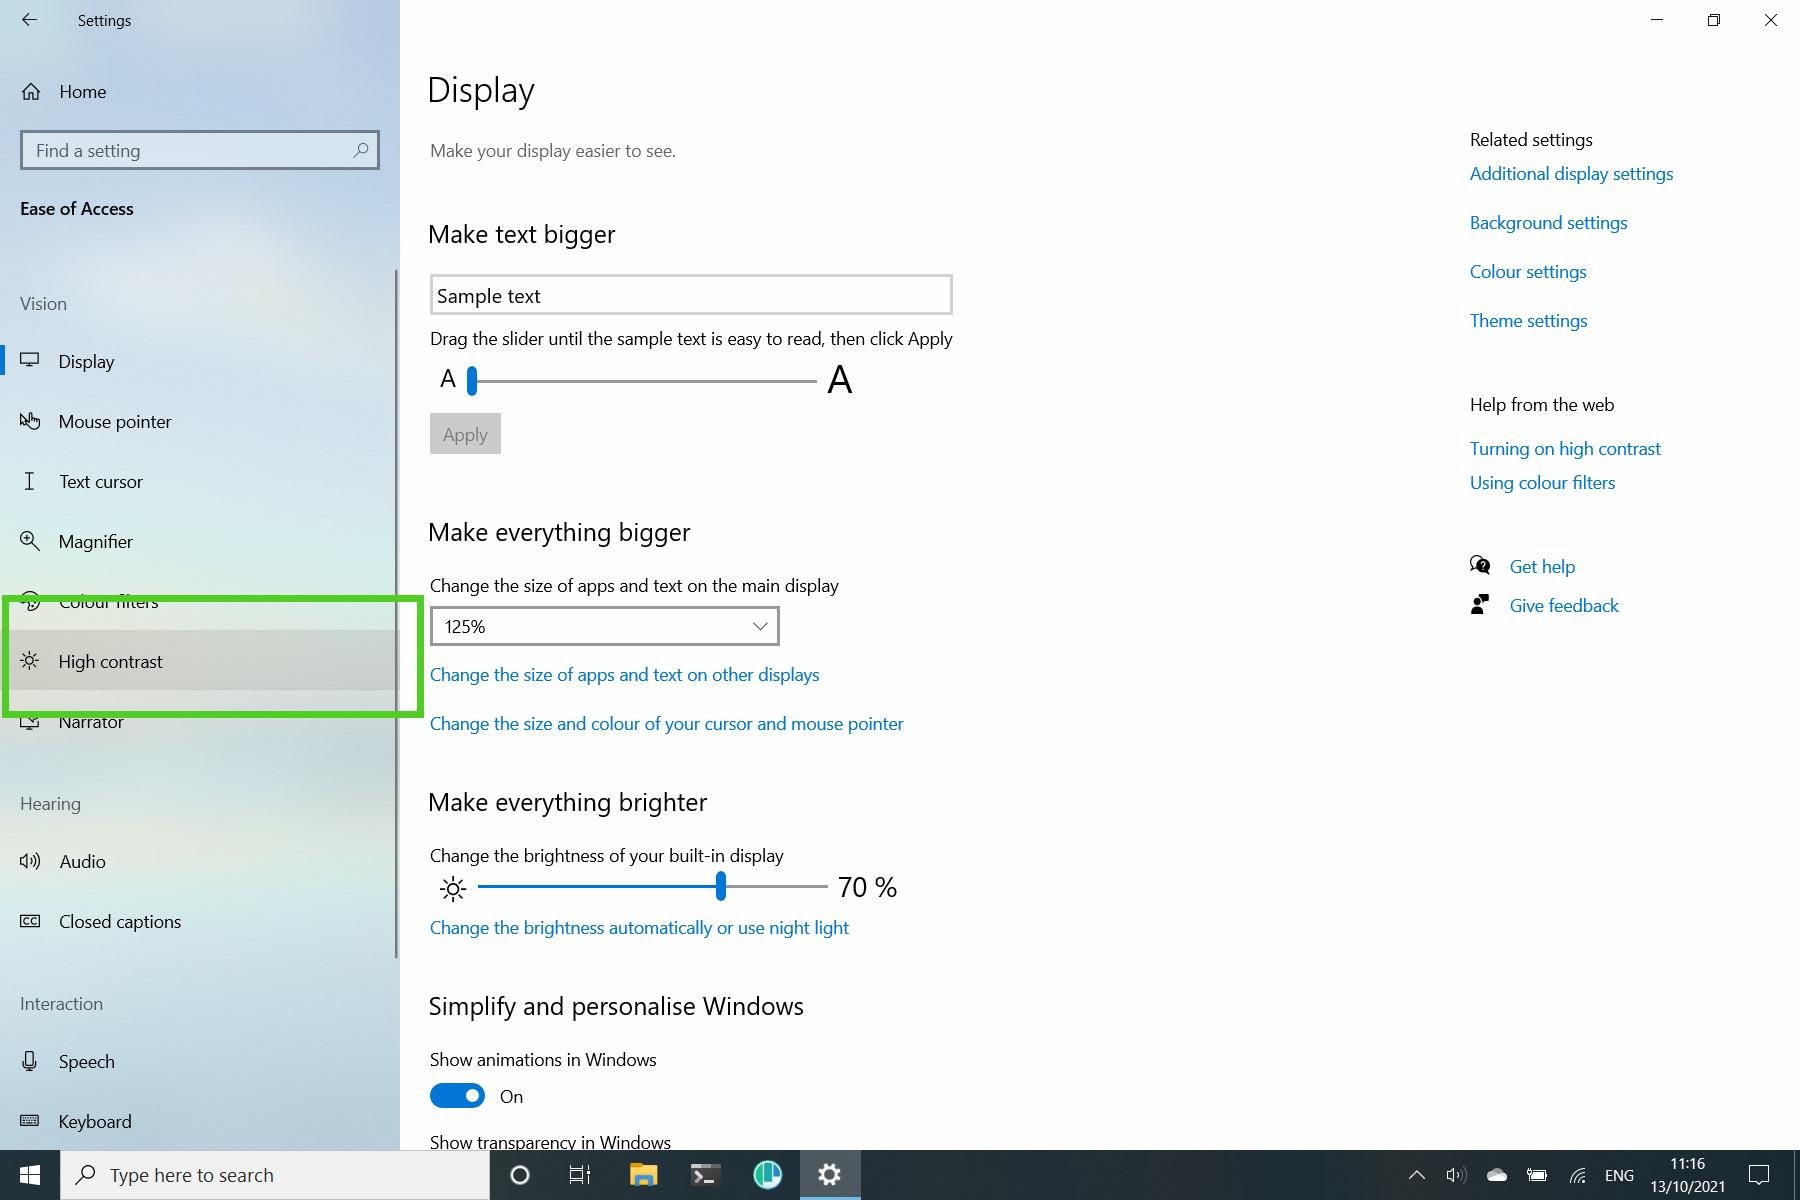 Windows 10 Ease of Access settings